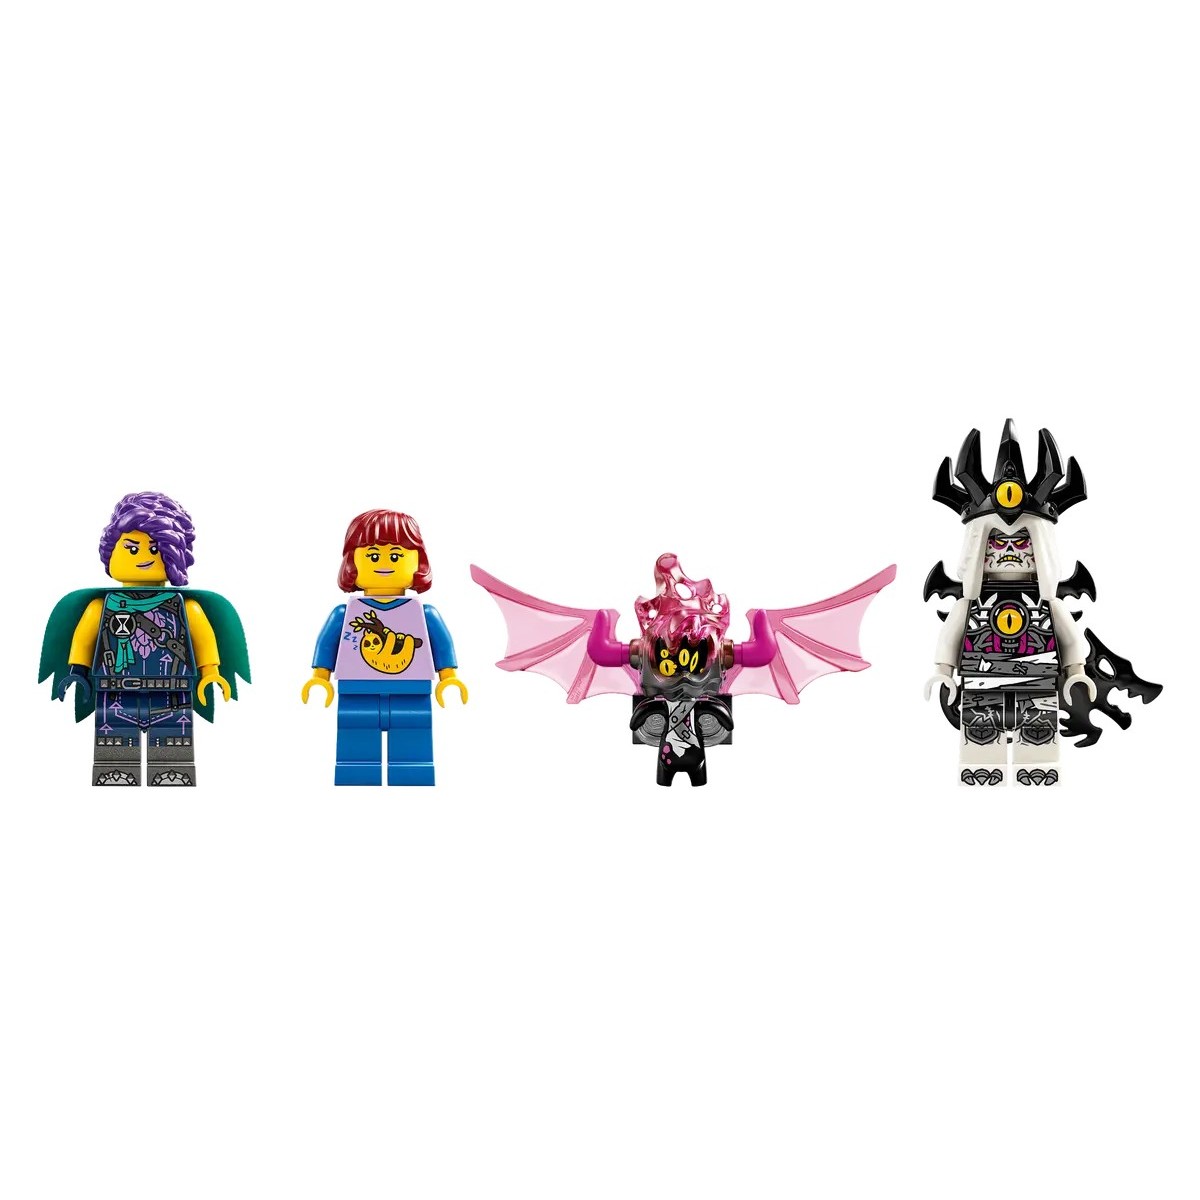 LEGO DREAMZZZ LIETAJUCI KON PEGAS /71457/